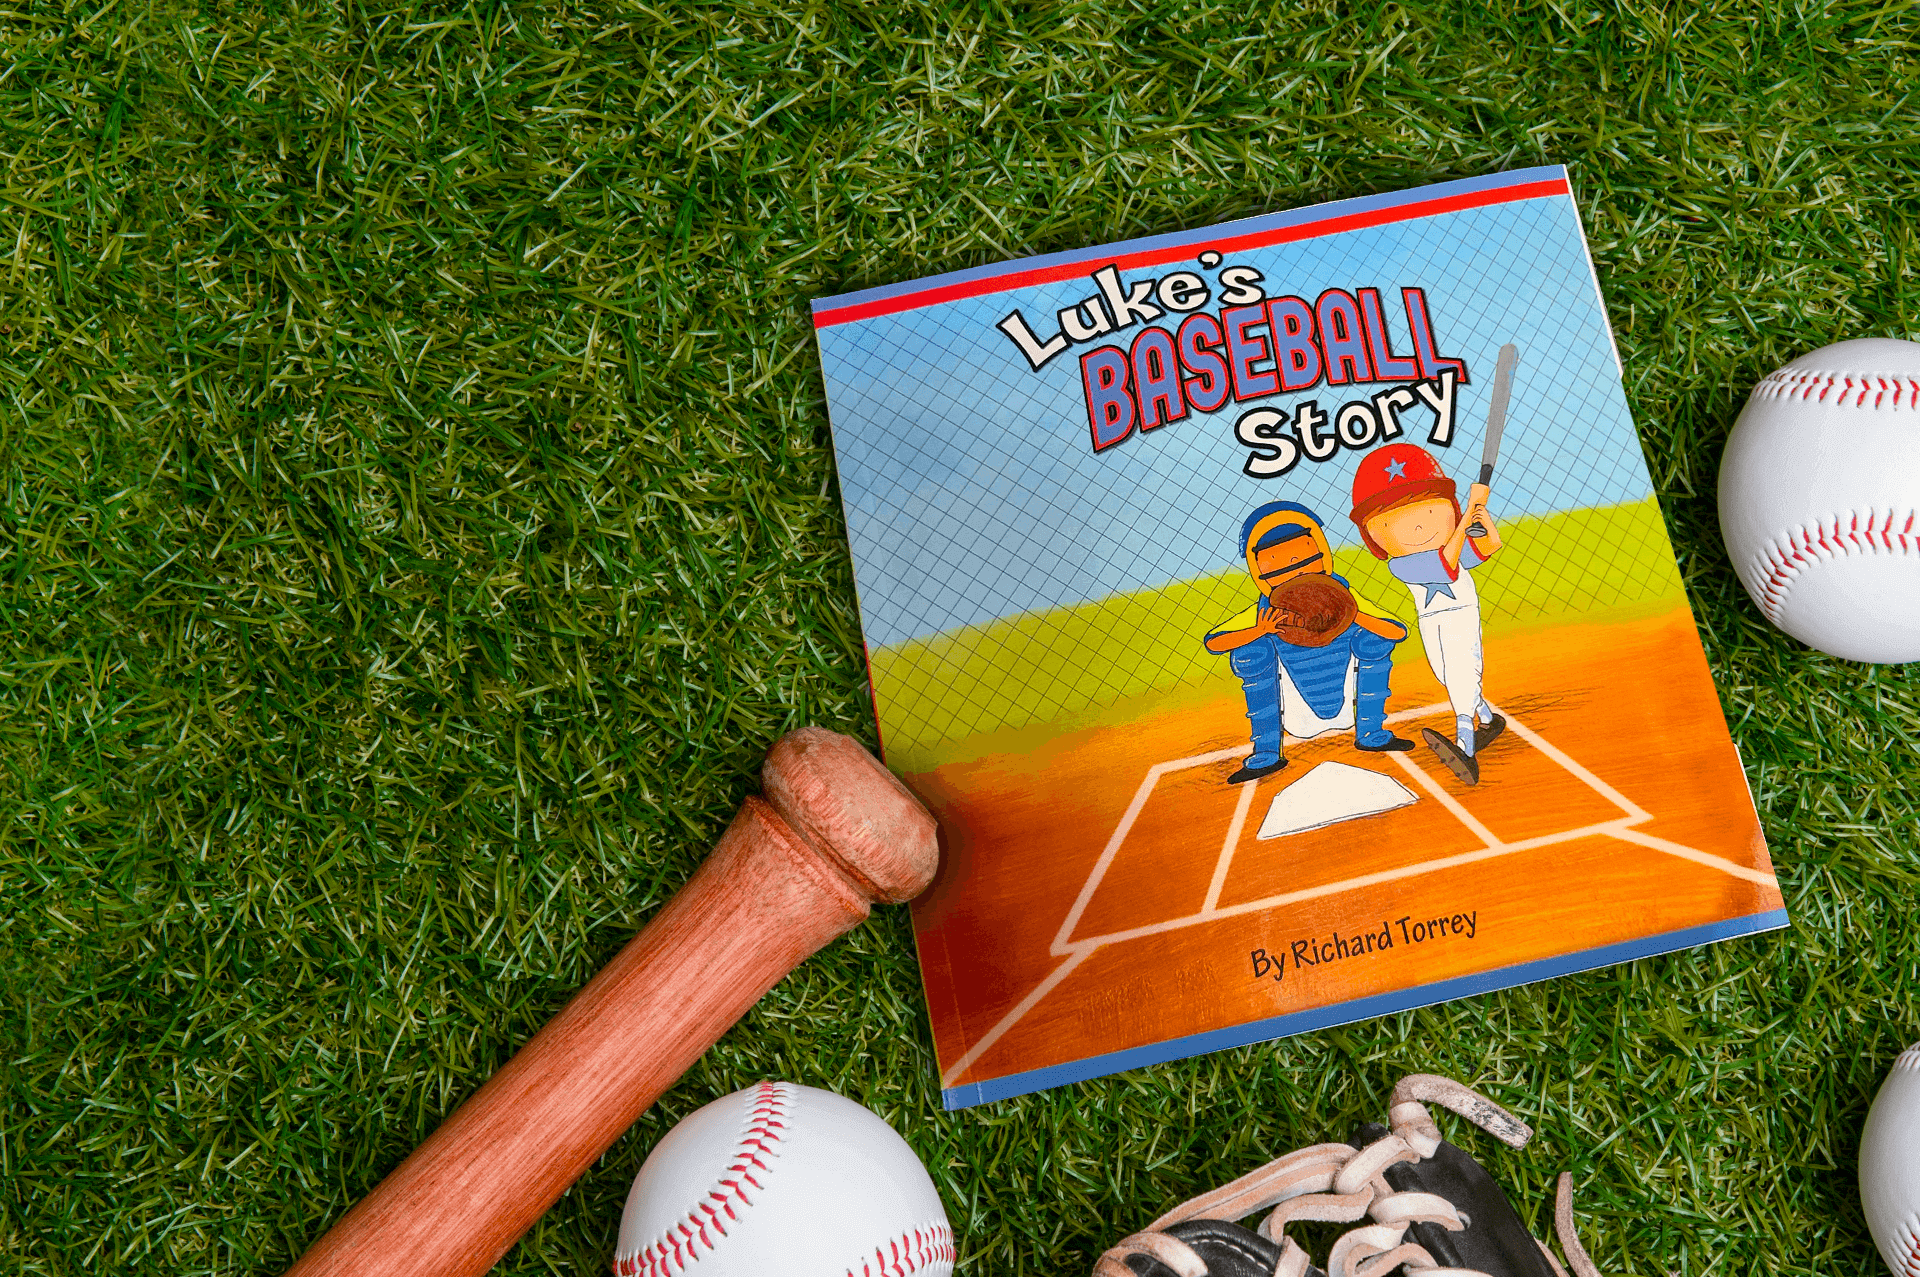 Luke's Baseball Story book in large image